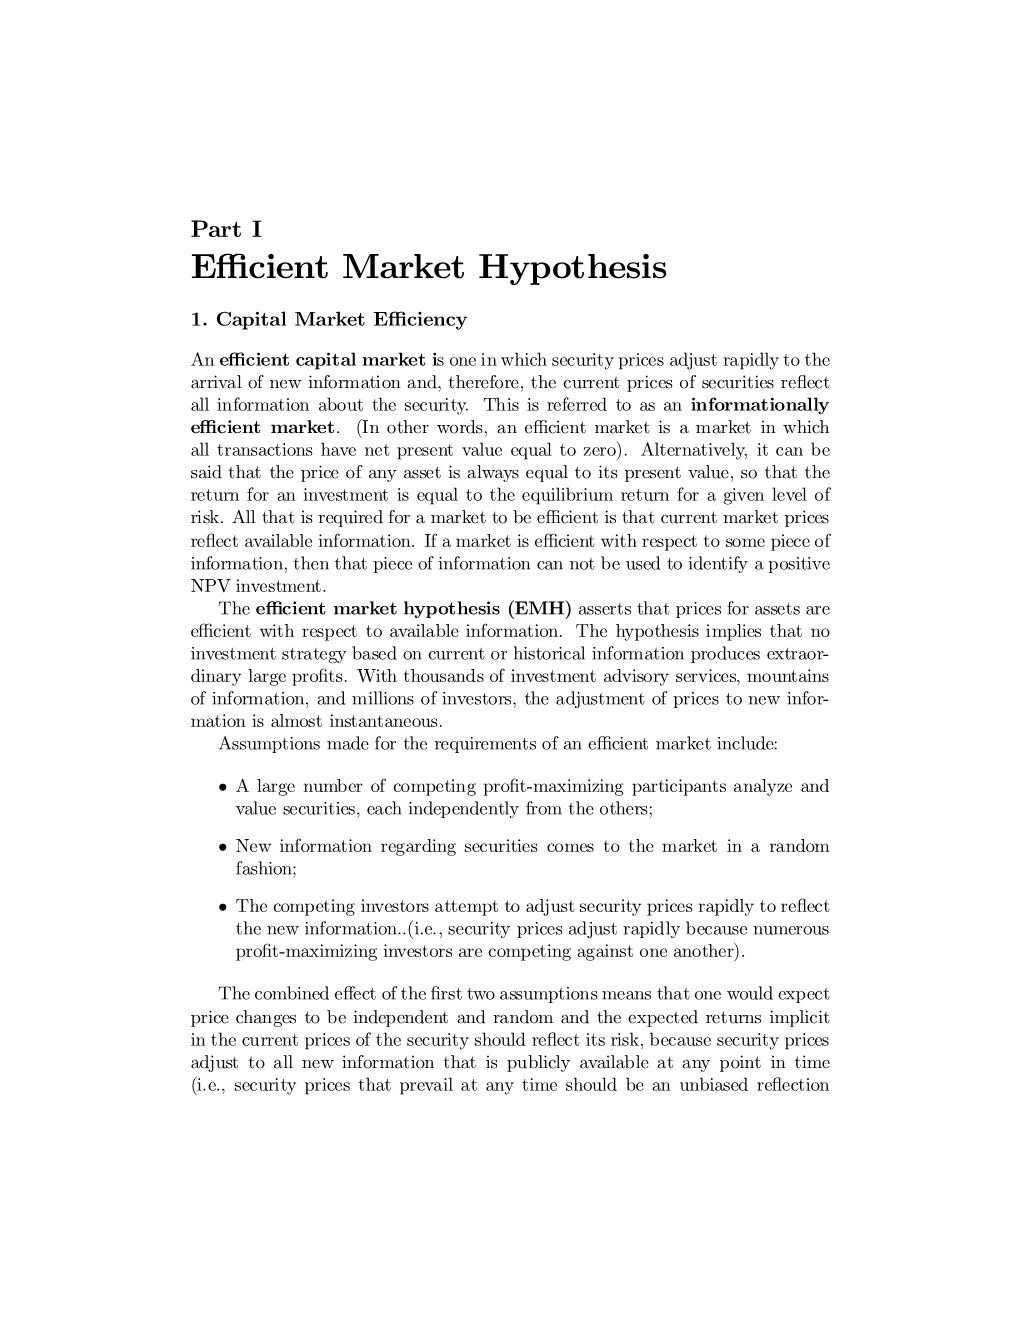 Efficient Market Hypothesis